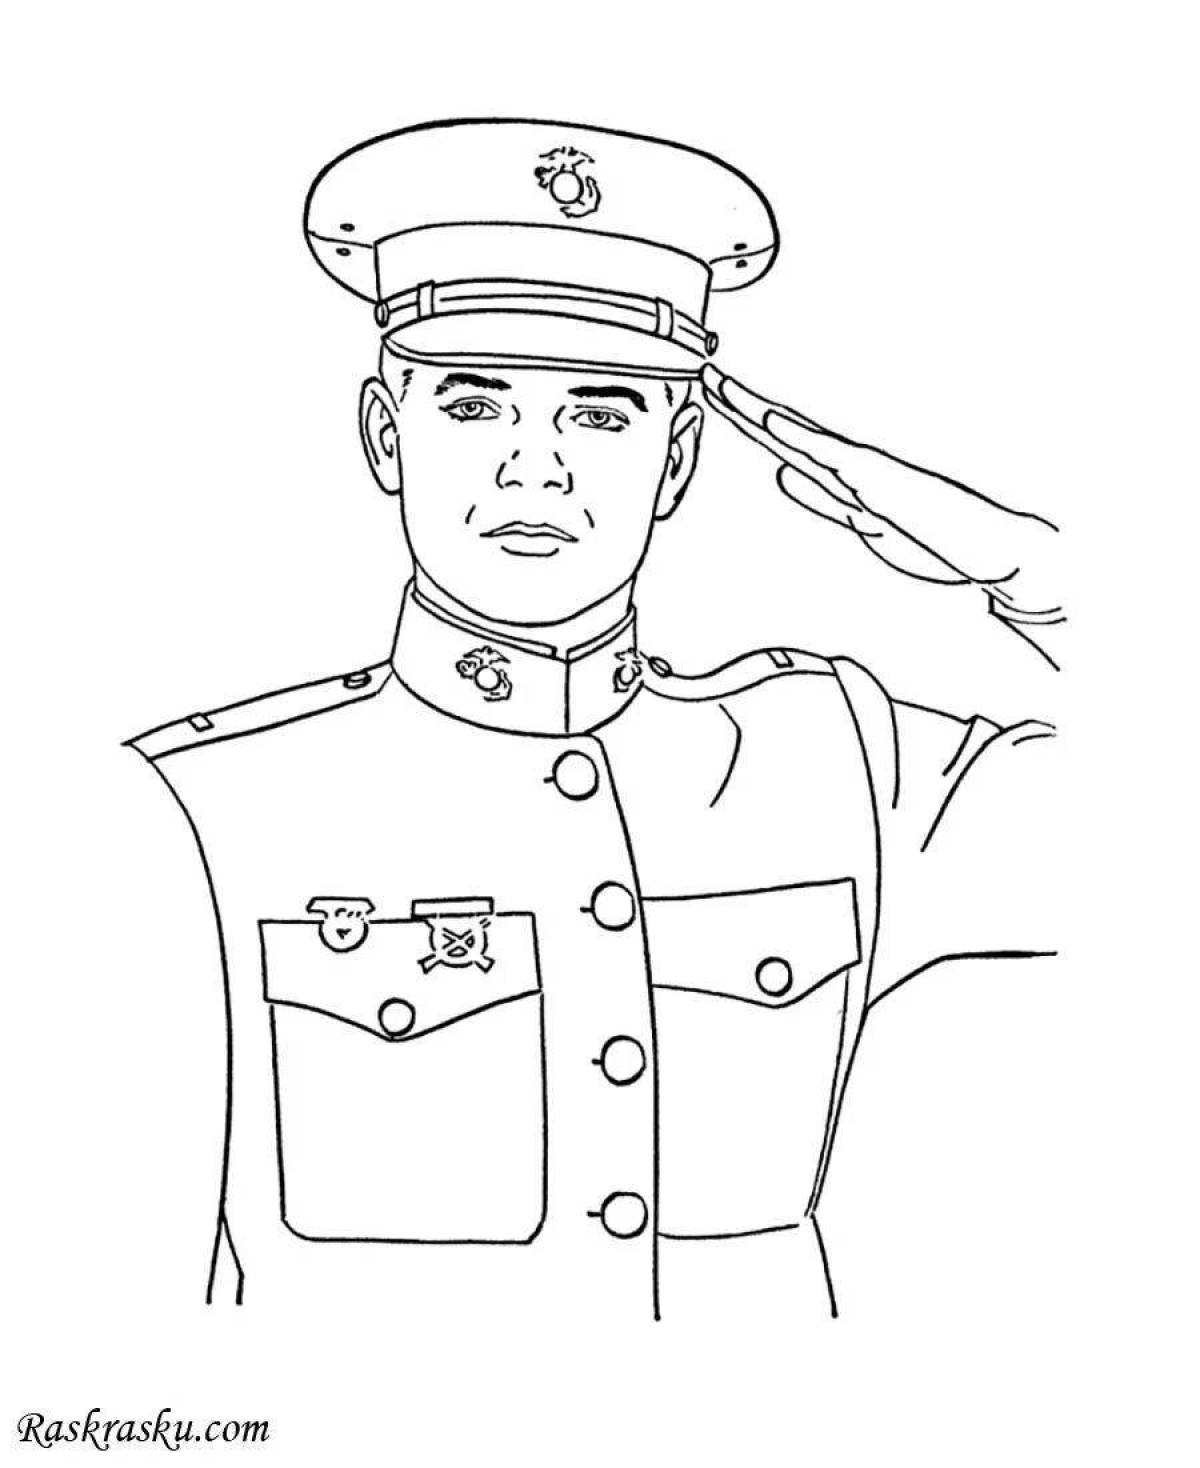 Dazzling military uniform coloring book